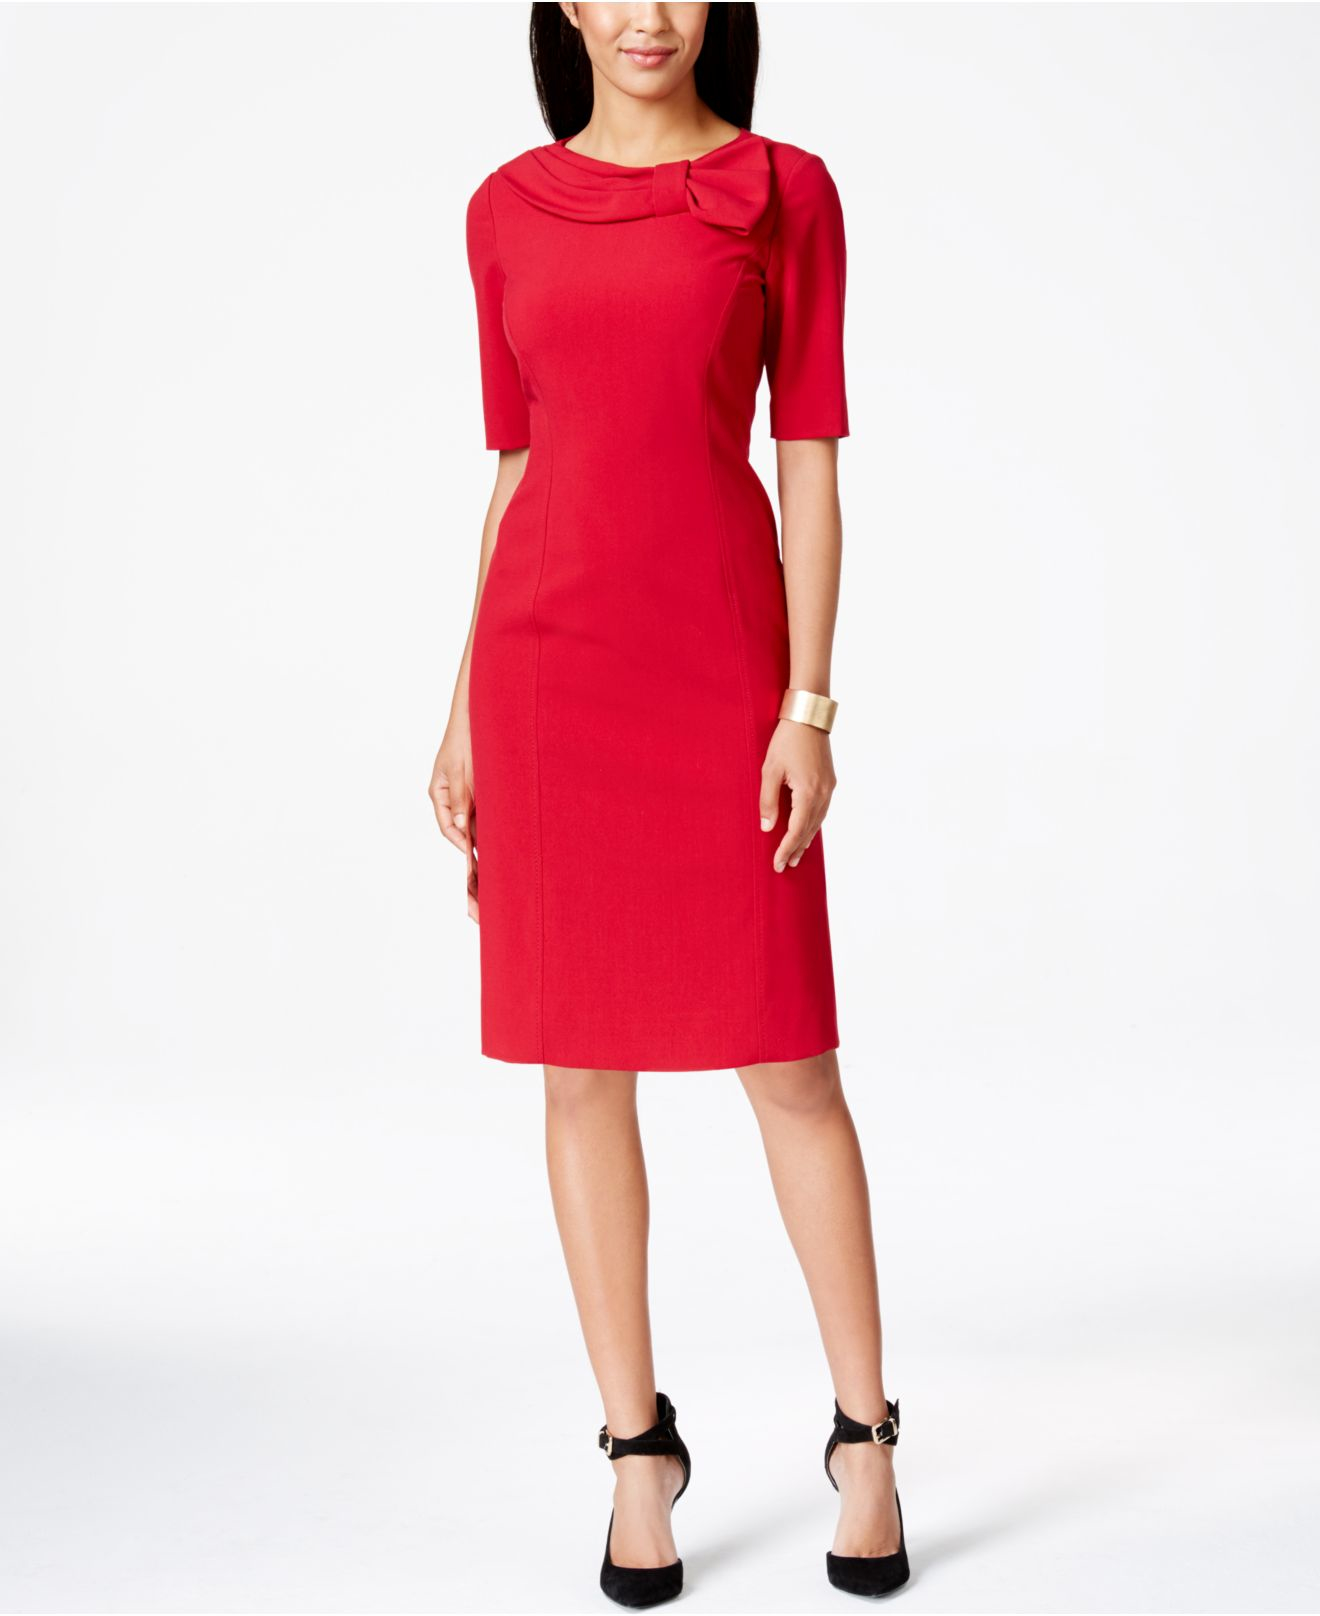 Lyst - Tahari Bow-collar Sheath Dress in Red